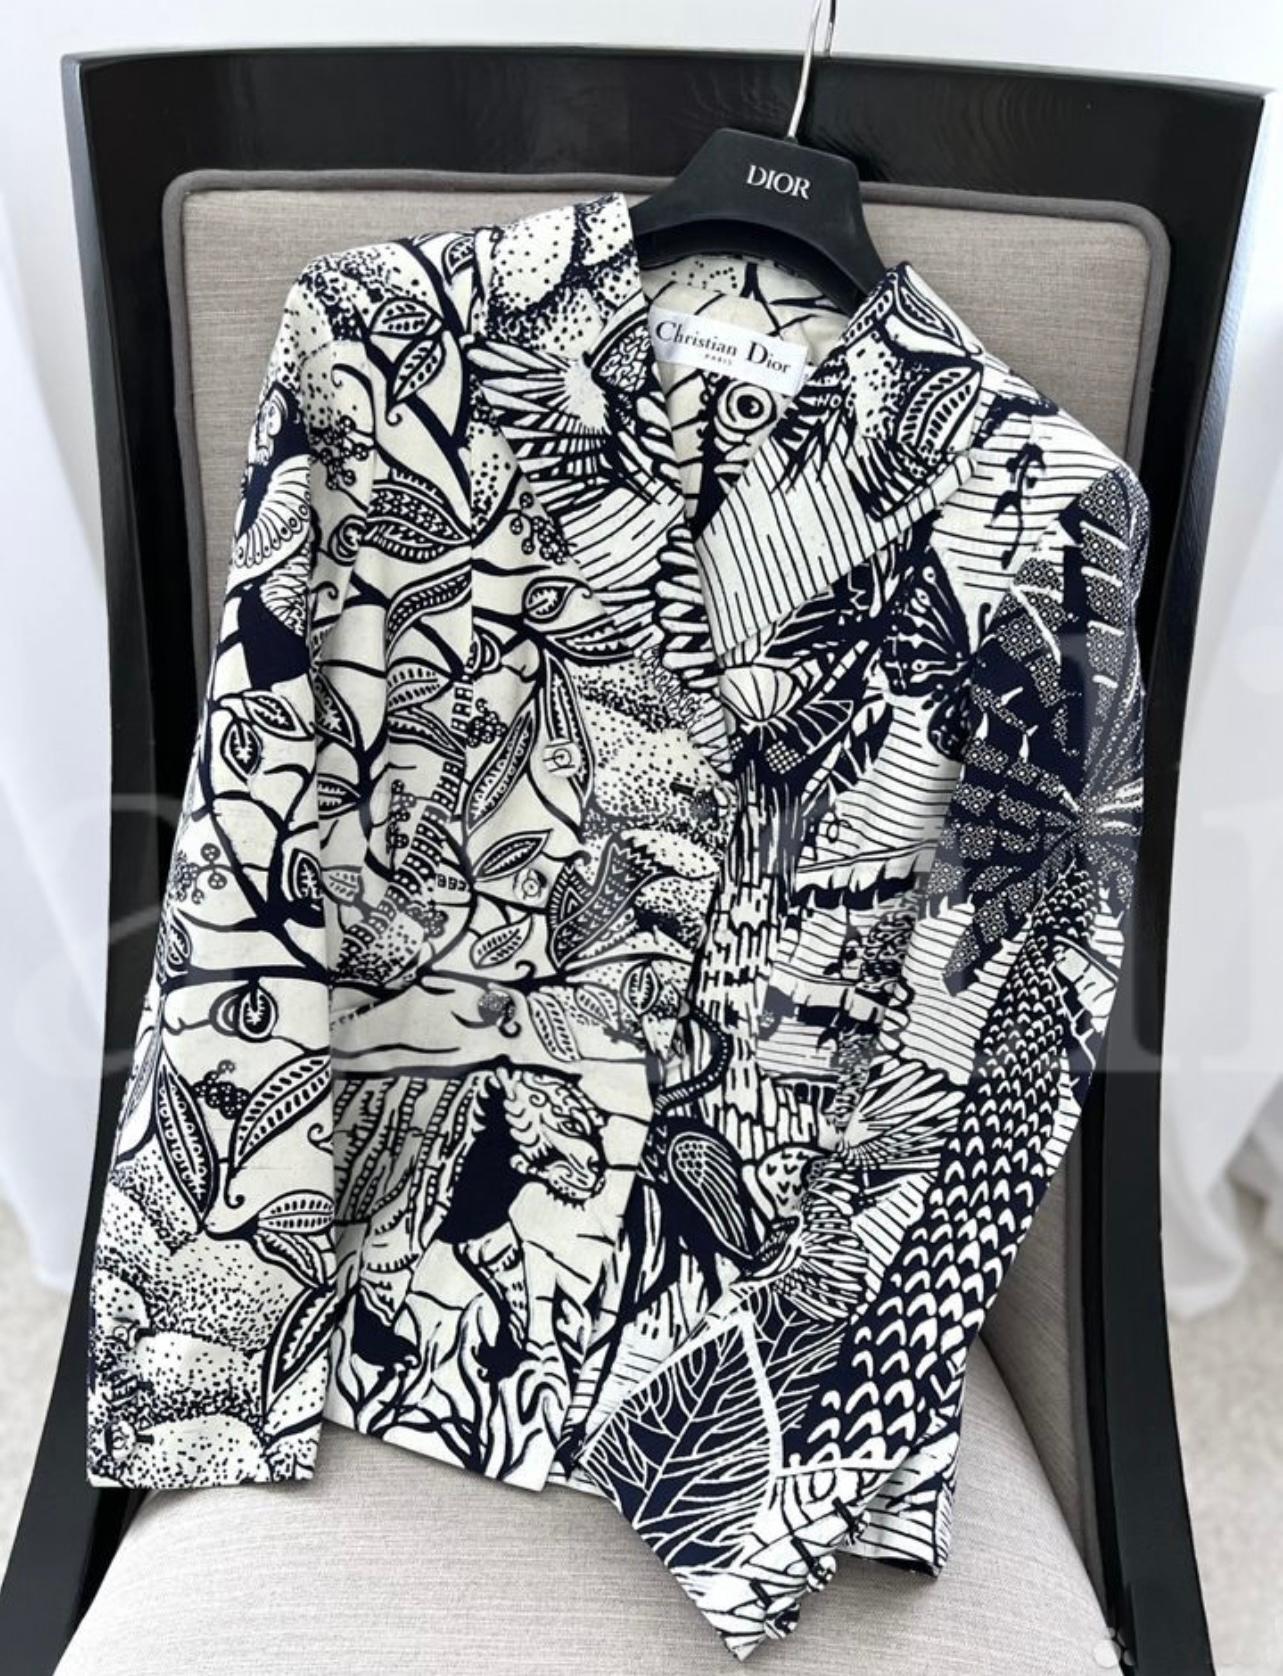 Dior Iconic BAR 35 Montaigne wonderful Jacket.
Size mark 36 FR, pristine condition